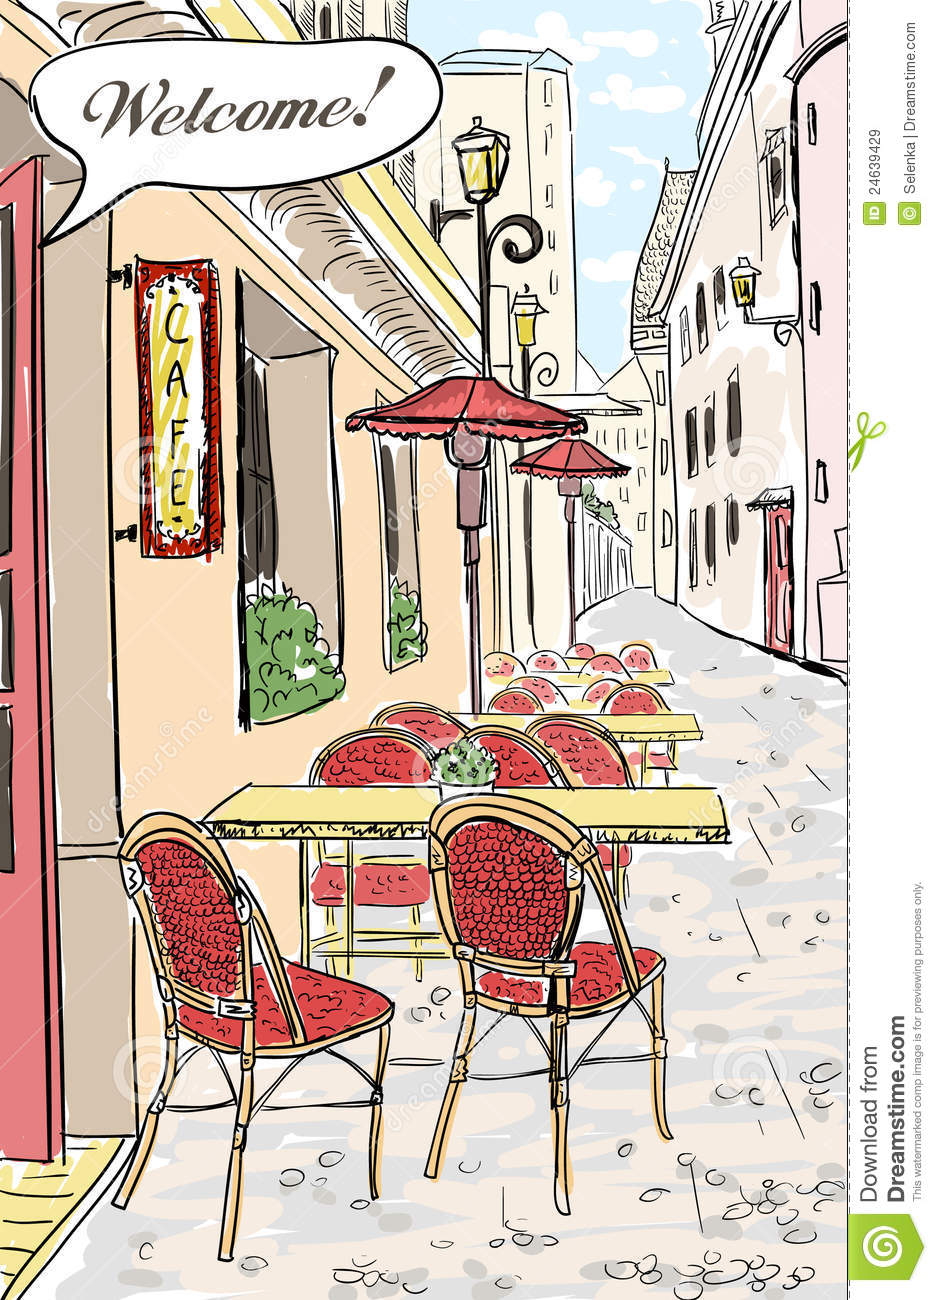 Street Cafe Sketch Illustration  Royalty Free Stock Images   Image